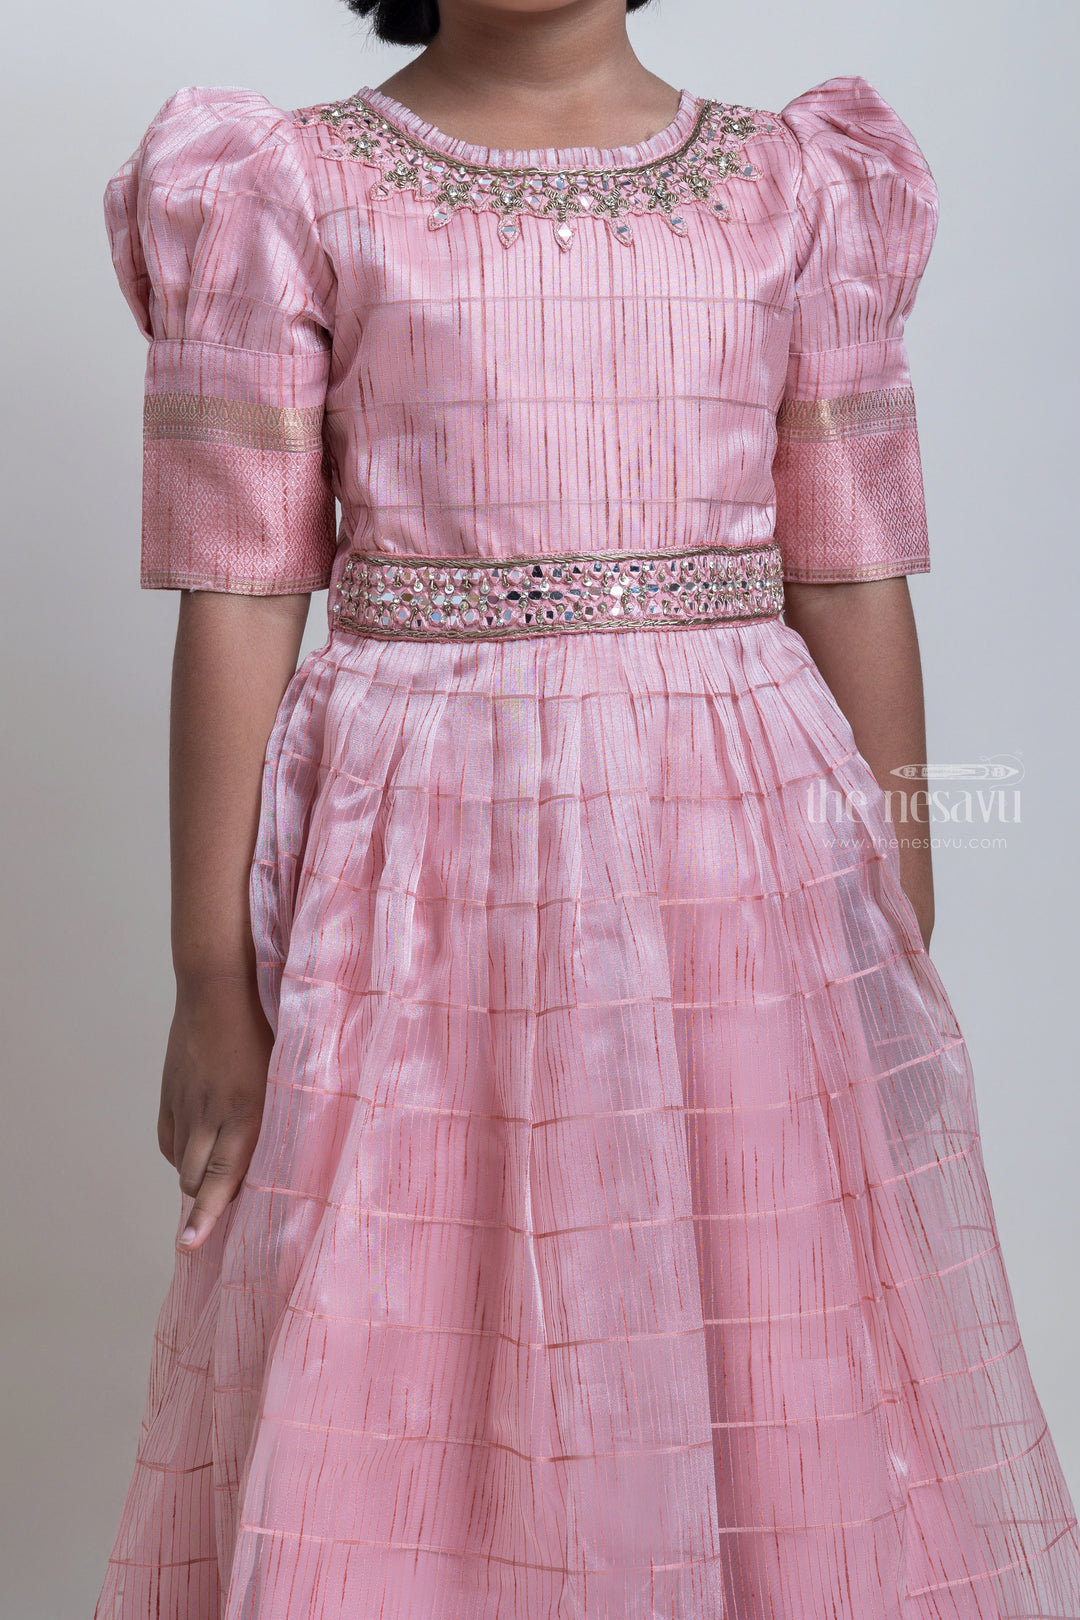 The Nesavu Party Gown Rosy Brown Full Length Silk Cotton Designer Anarkali Dresses For Baby Girls Nesavu Top 15 Designer Organza Silk Anarkali For Girls | Smart Ethnic Ideas | The Nesavu